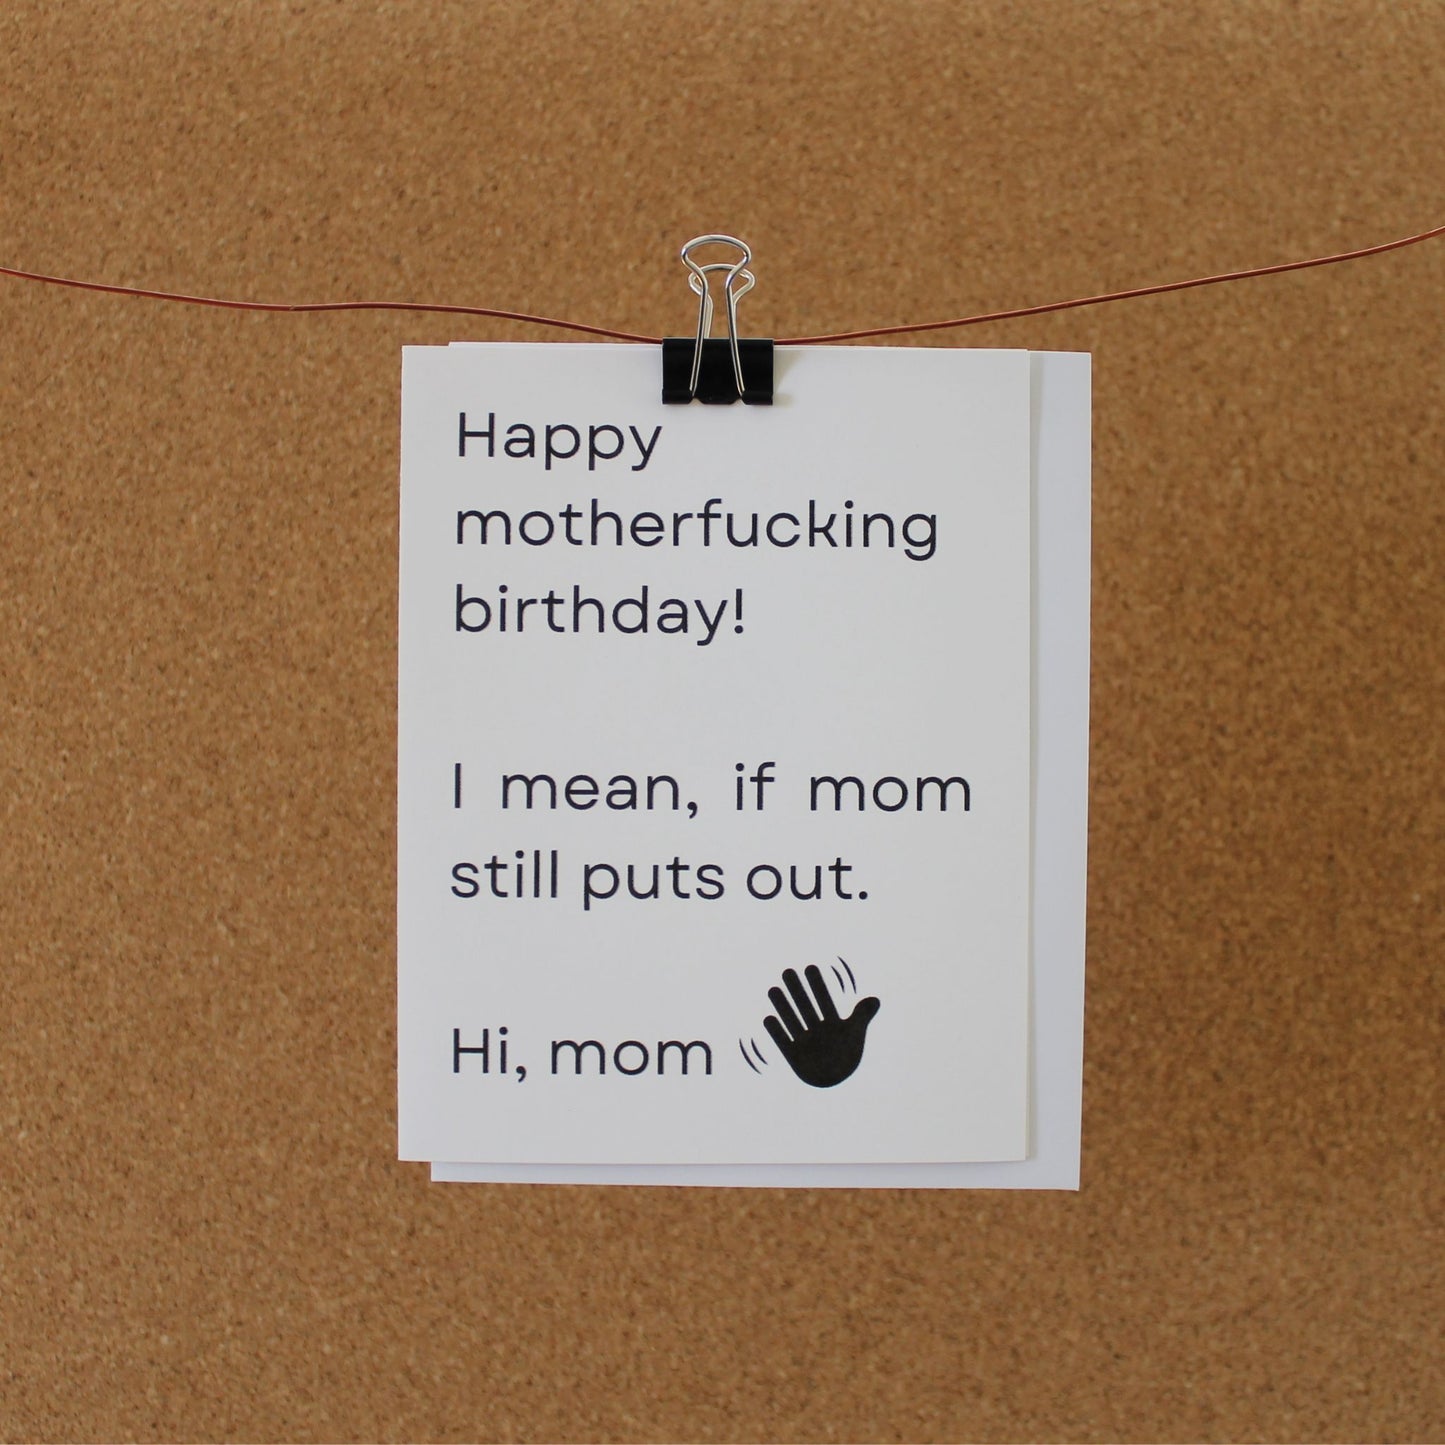 Funny Birthday Card: "Happy motherfucking birthday! I mean, if mom still puts out. Hi, mom!"